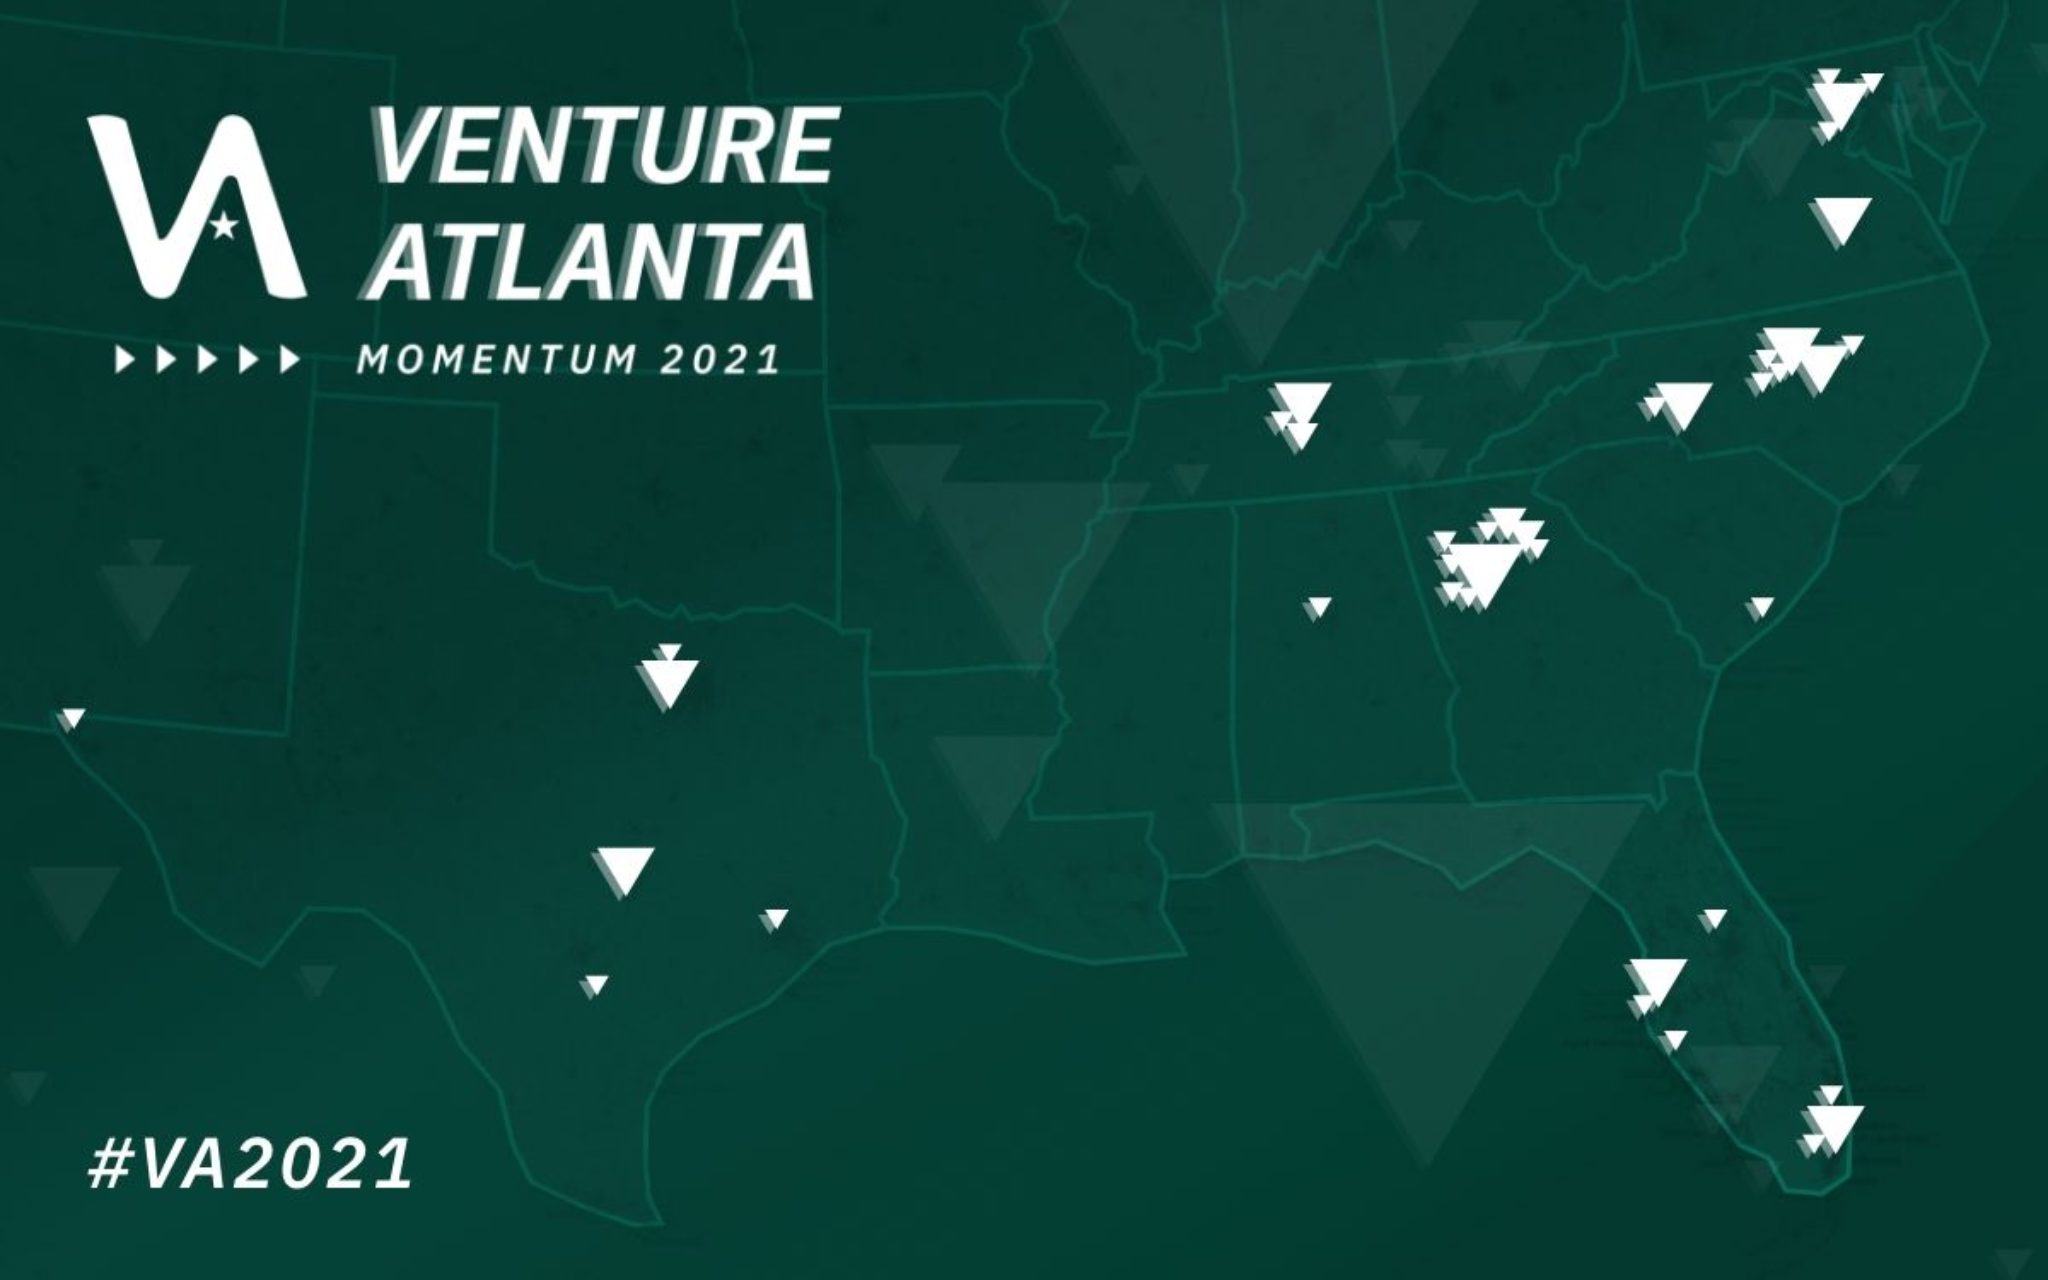 HealthSnap Selected as a Venture Atlanta 2021 Presenting Company